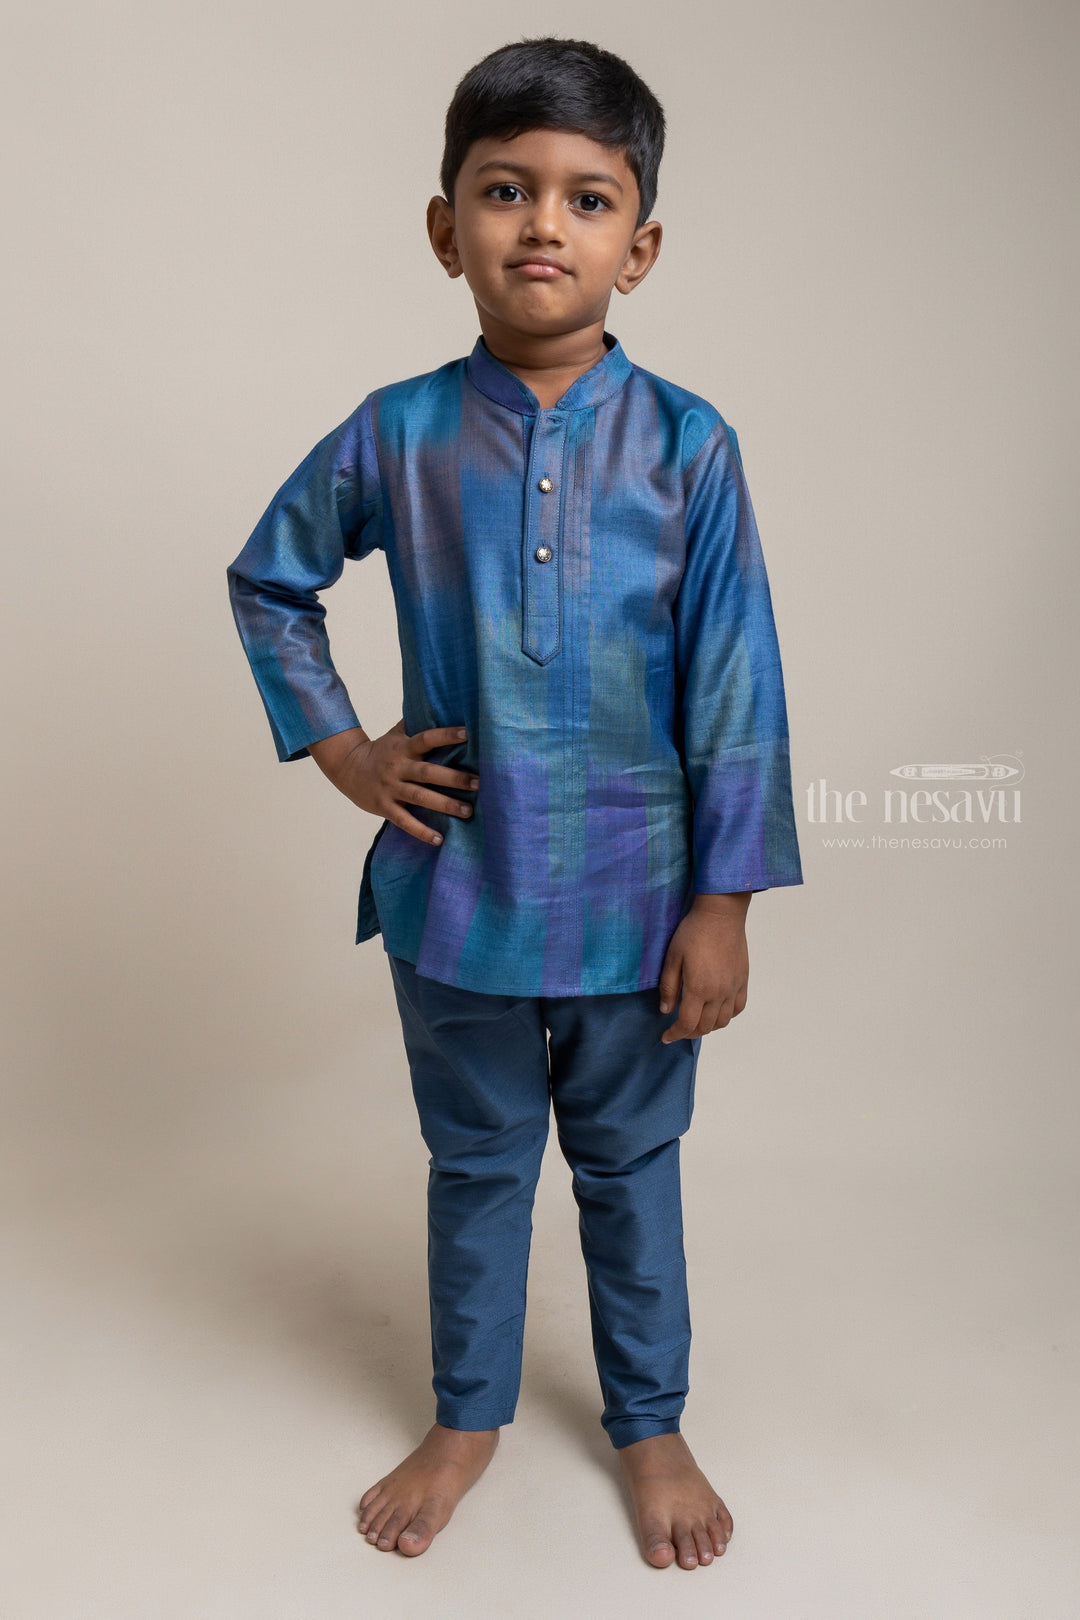 The Nesavu Boys Kurtha Set Elegant Blue Cotton Kurta With Pant For Little Boys Nesavu 12 (3M) / Blue / Silk Blend BES301A-12 Best Ethnic Wear Collection For Boys | Trendy Boys Collection | The Nesavu